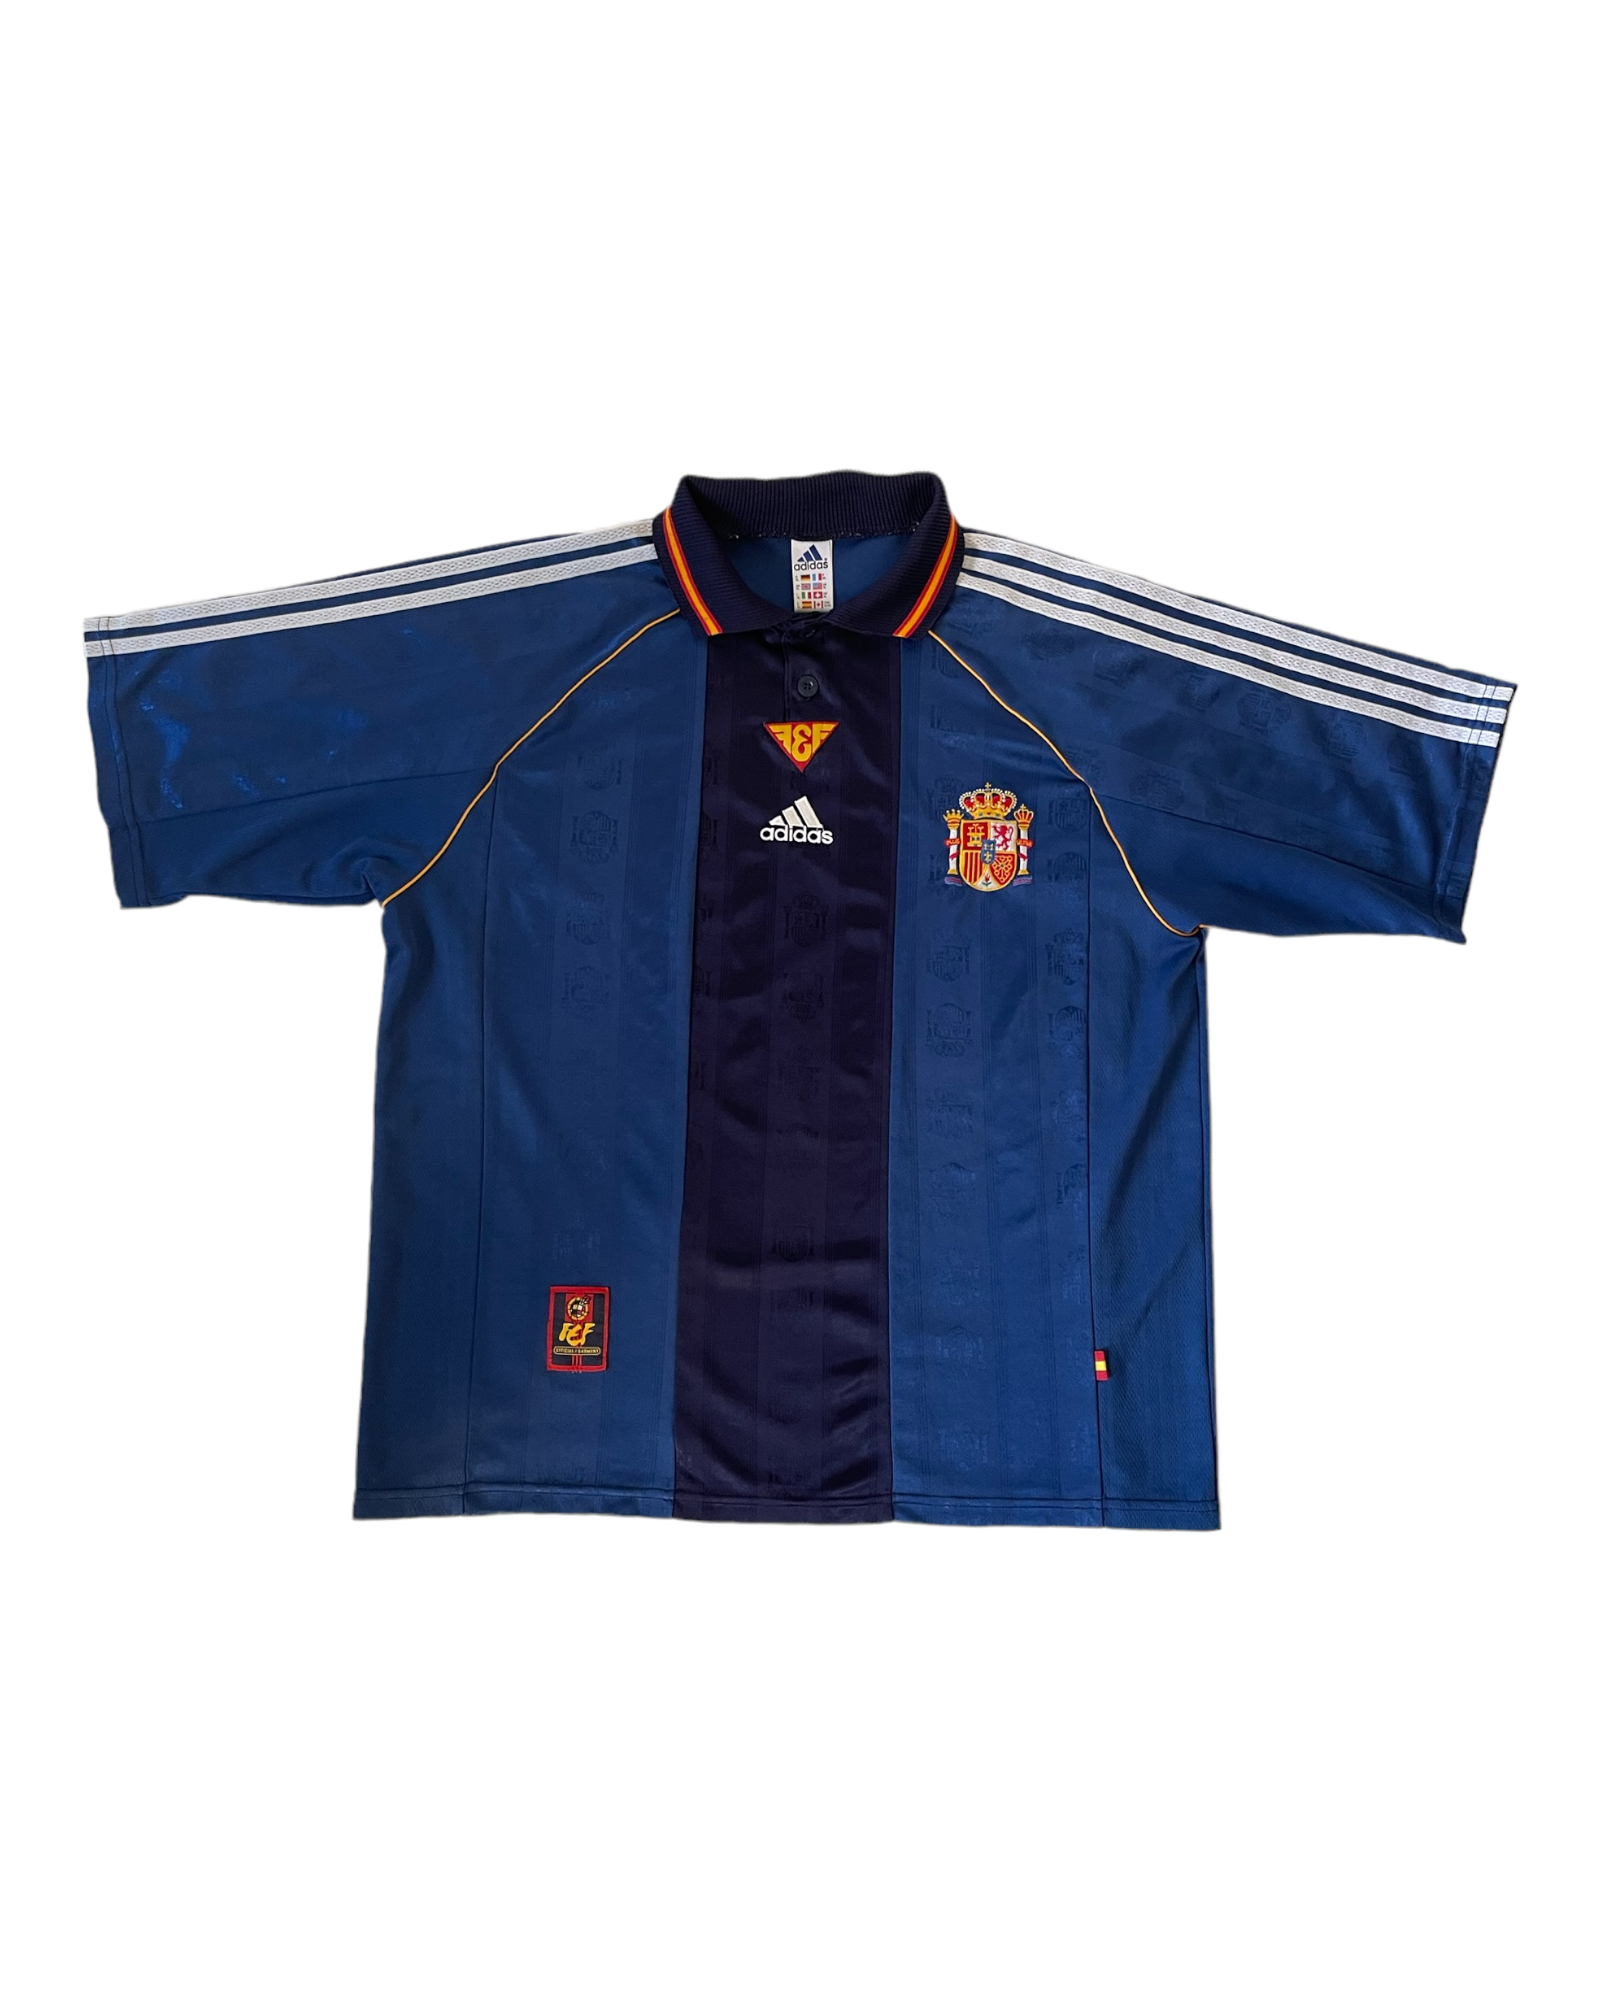 Spain Adidas 1998 - 1999 Away Third Football Shirt Size XL Made in England Blue